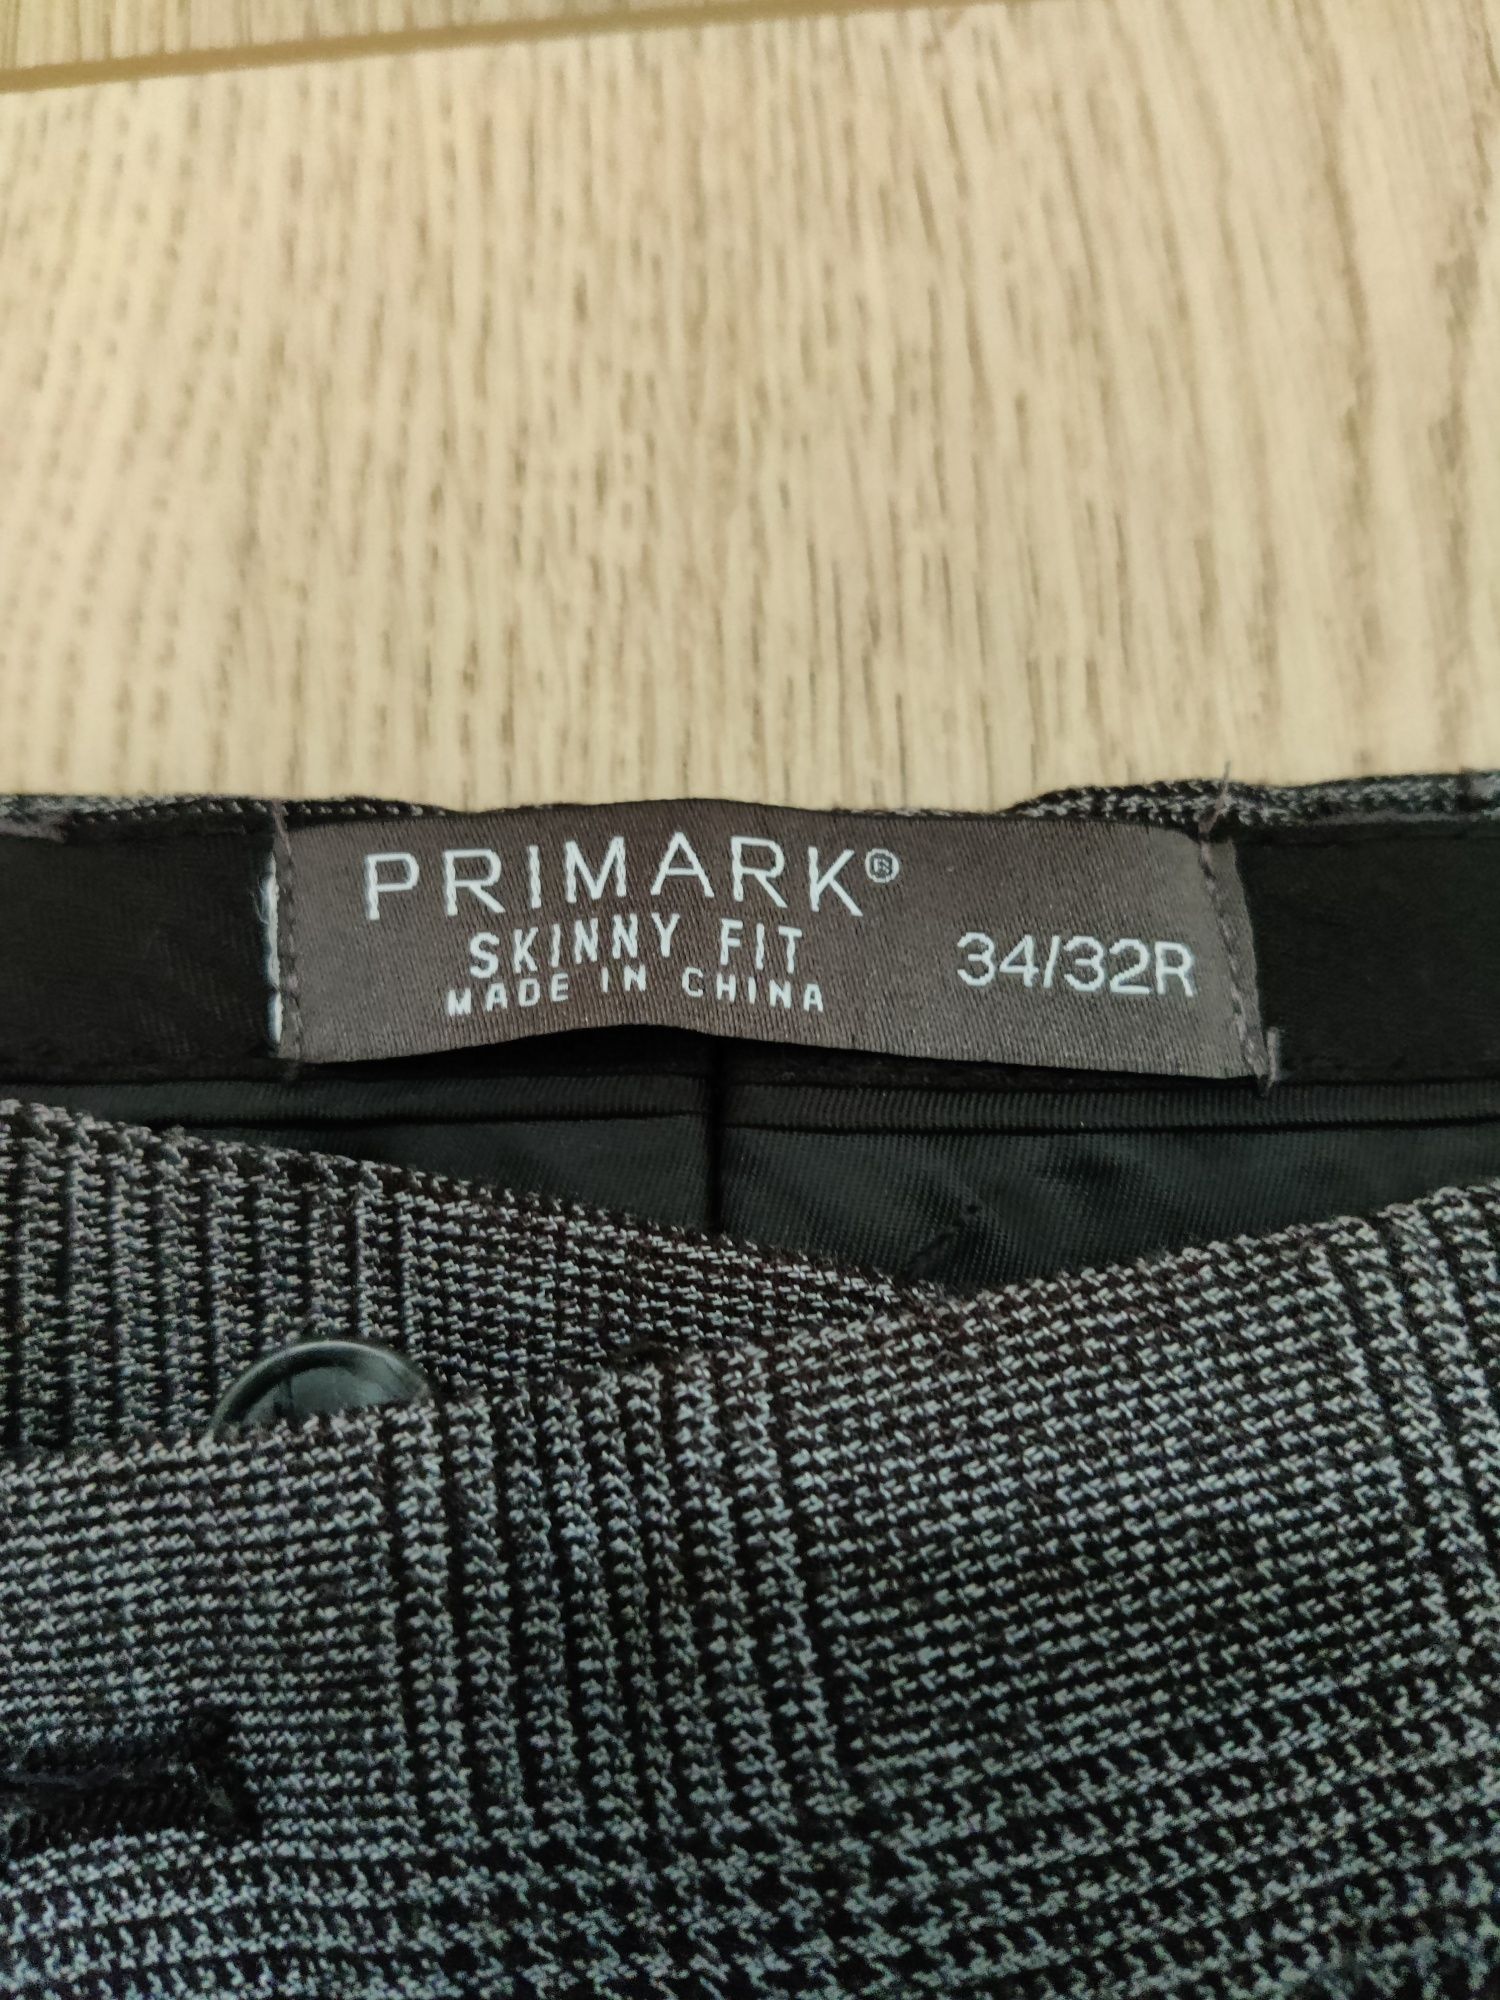 Spodnie męskie Primark skinny fit 34/32